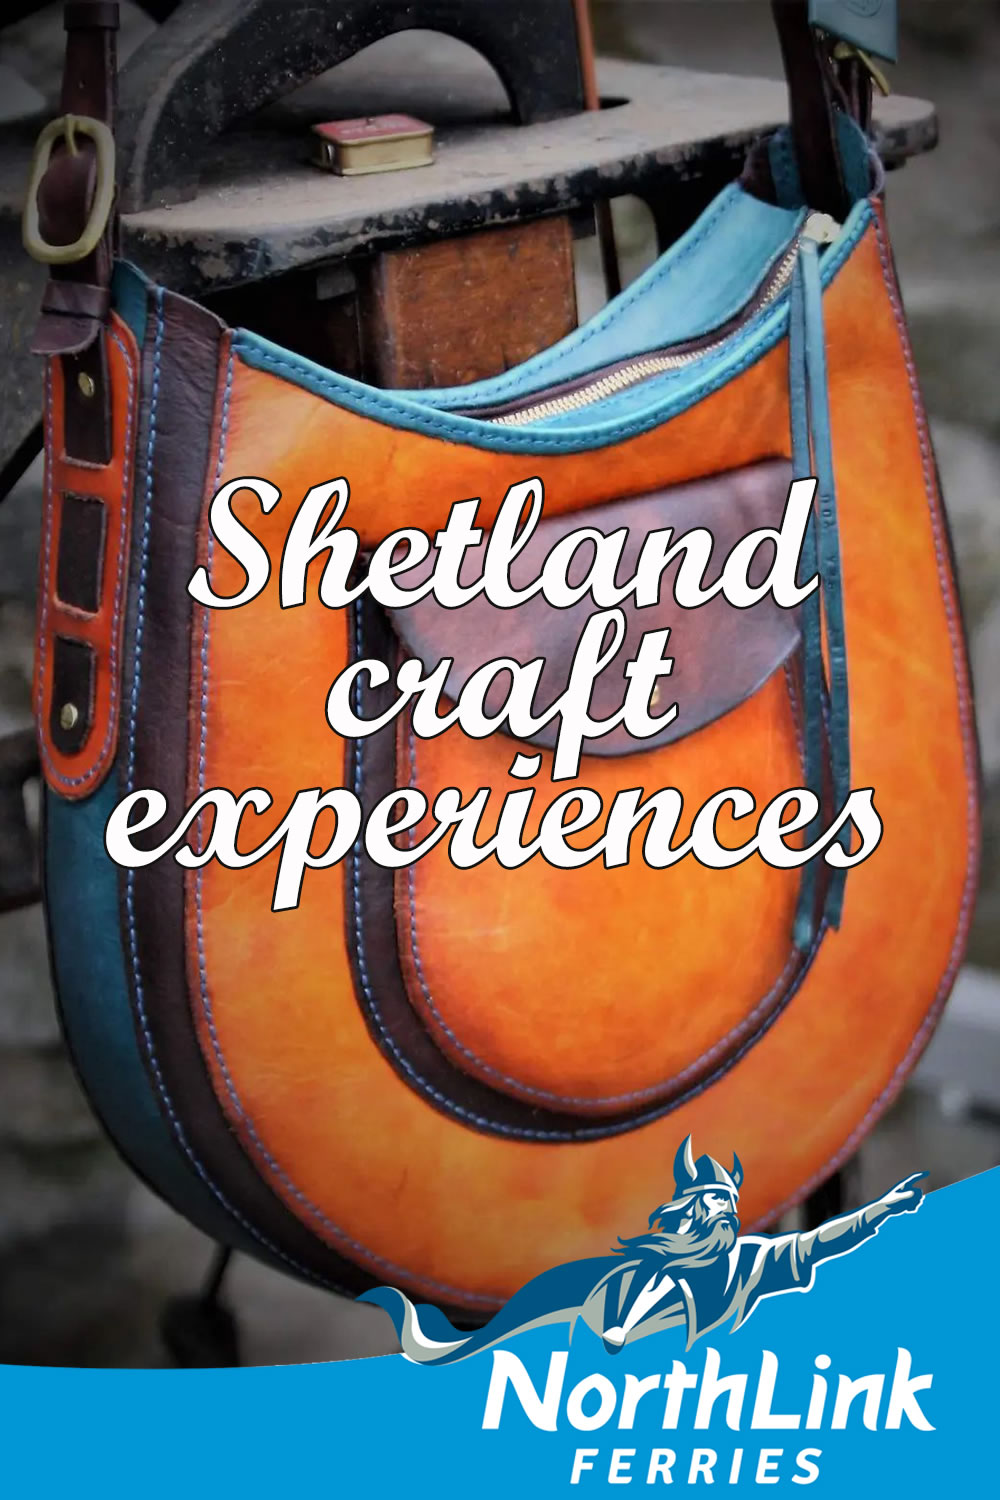 Shetland craft experiences